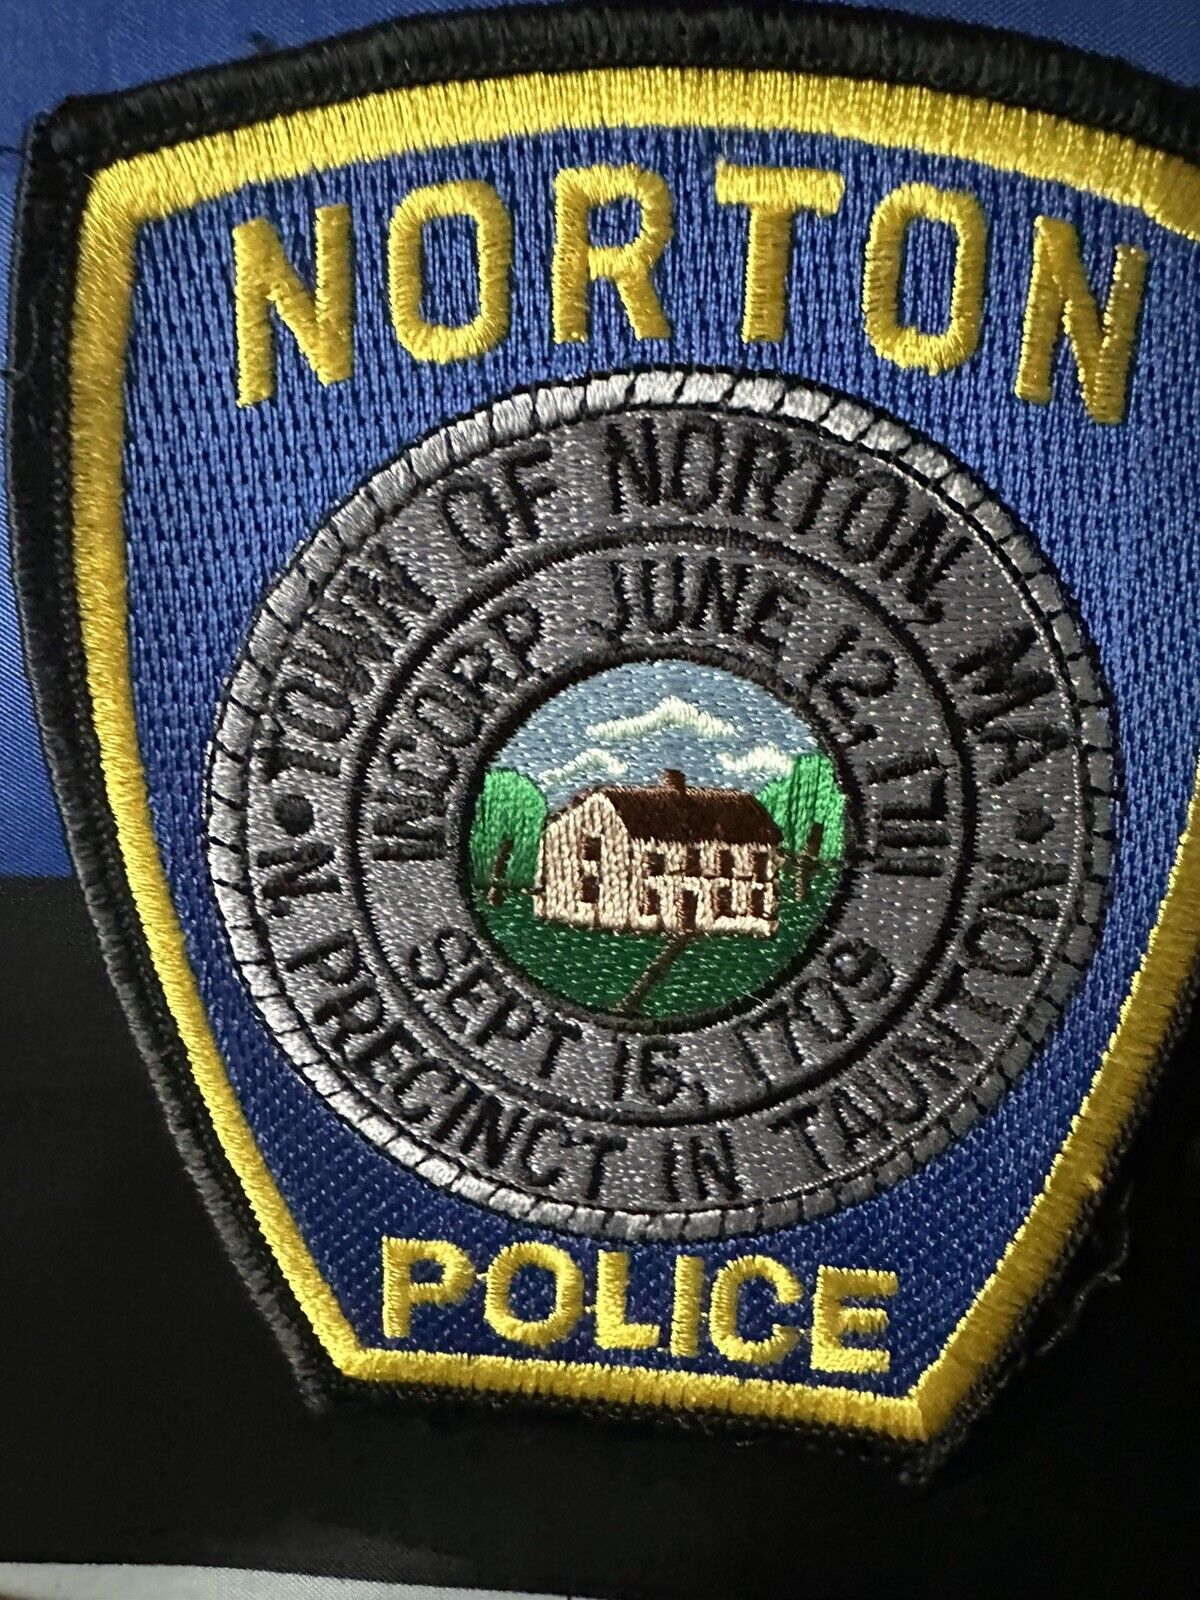 MASSACHUSETTS MA NORTON POLICE NICE SHOULDER PATCH SHERIFF